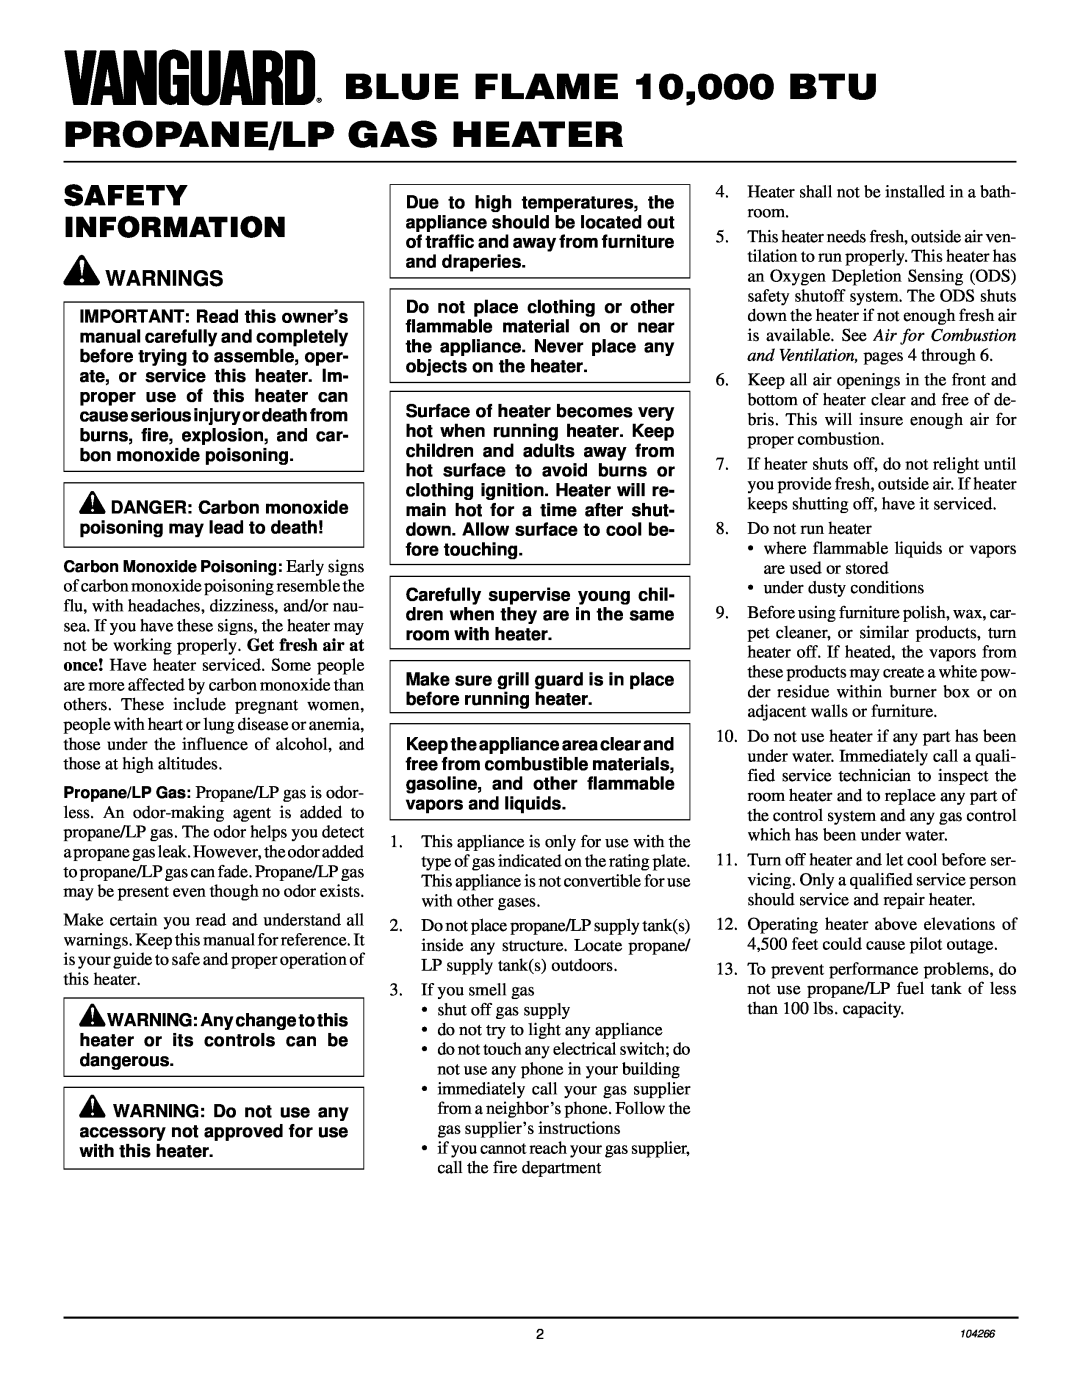 Desa VP1000BTA installation manual BLUE FLAME 10,000 BTU PROPANE/LP GAS HEATER, Safety Information, Warnings 